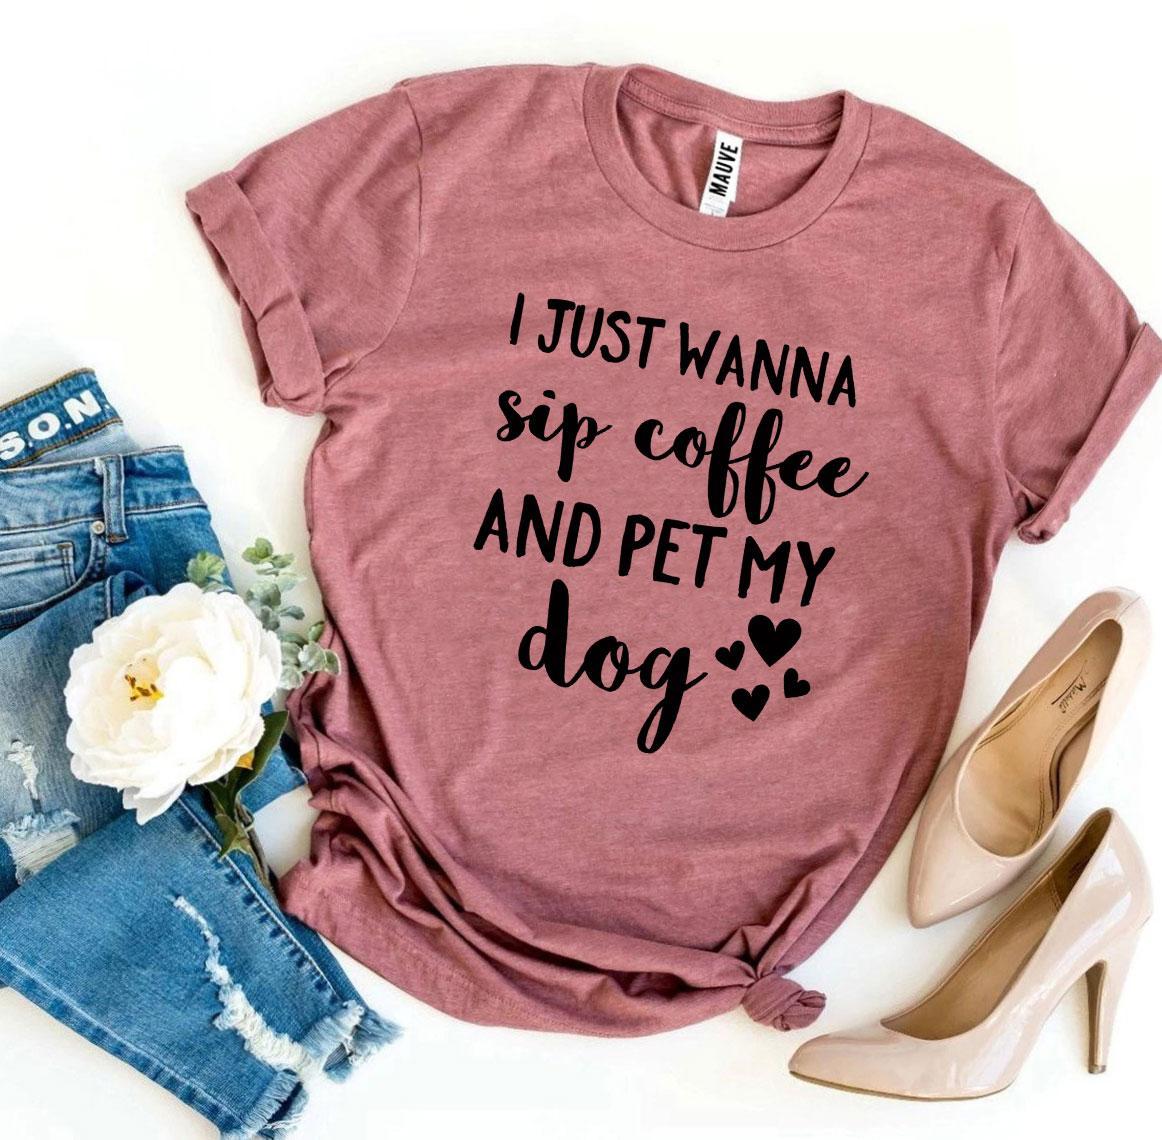 Sip Coffee & Pet My Dog T-Shirt